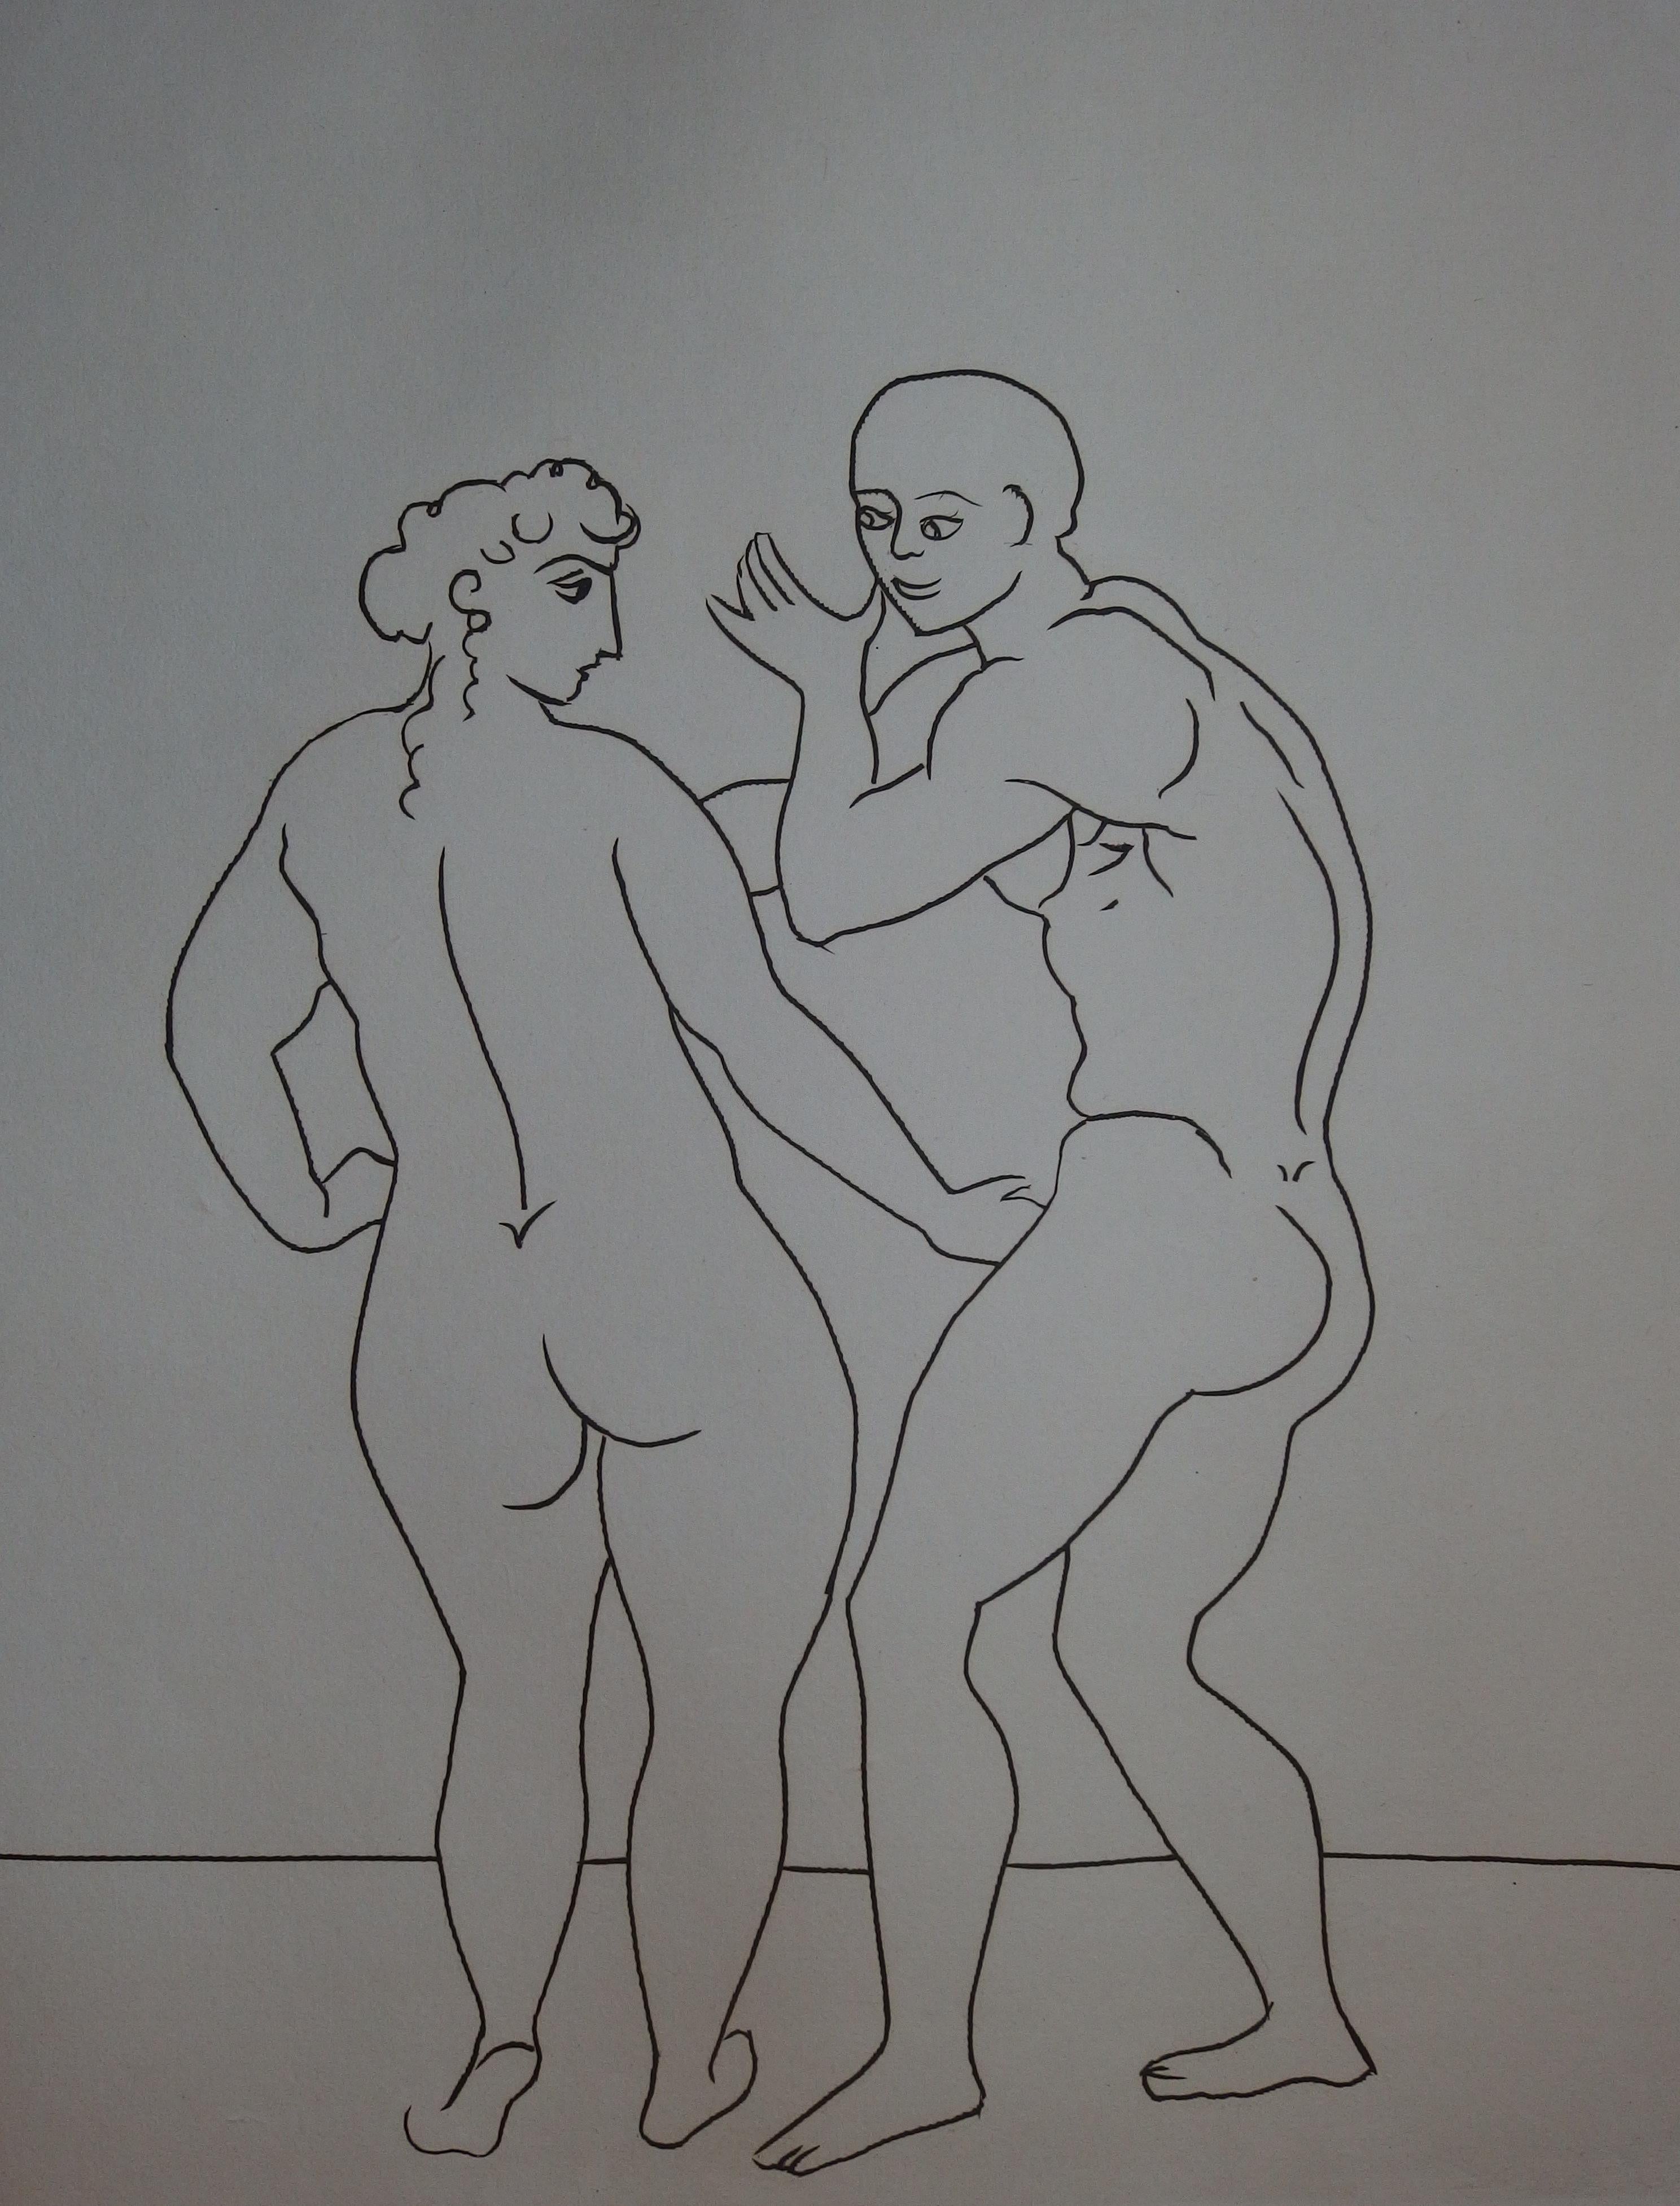 Seducting Couple - Original etching - 1951 - Modern Print by André Derain